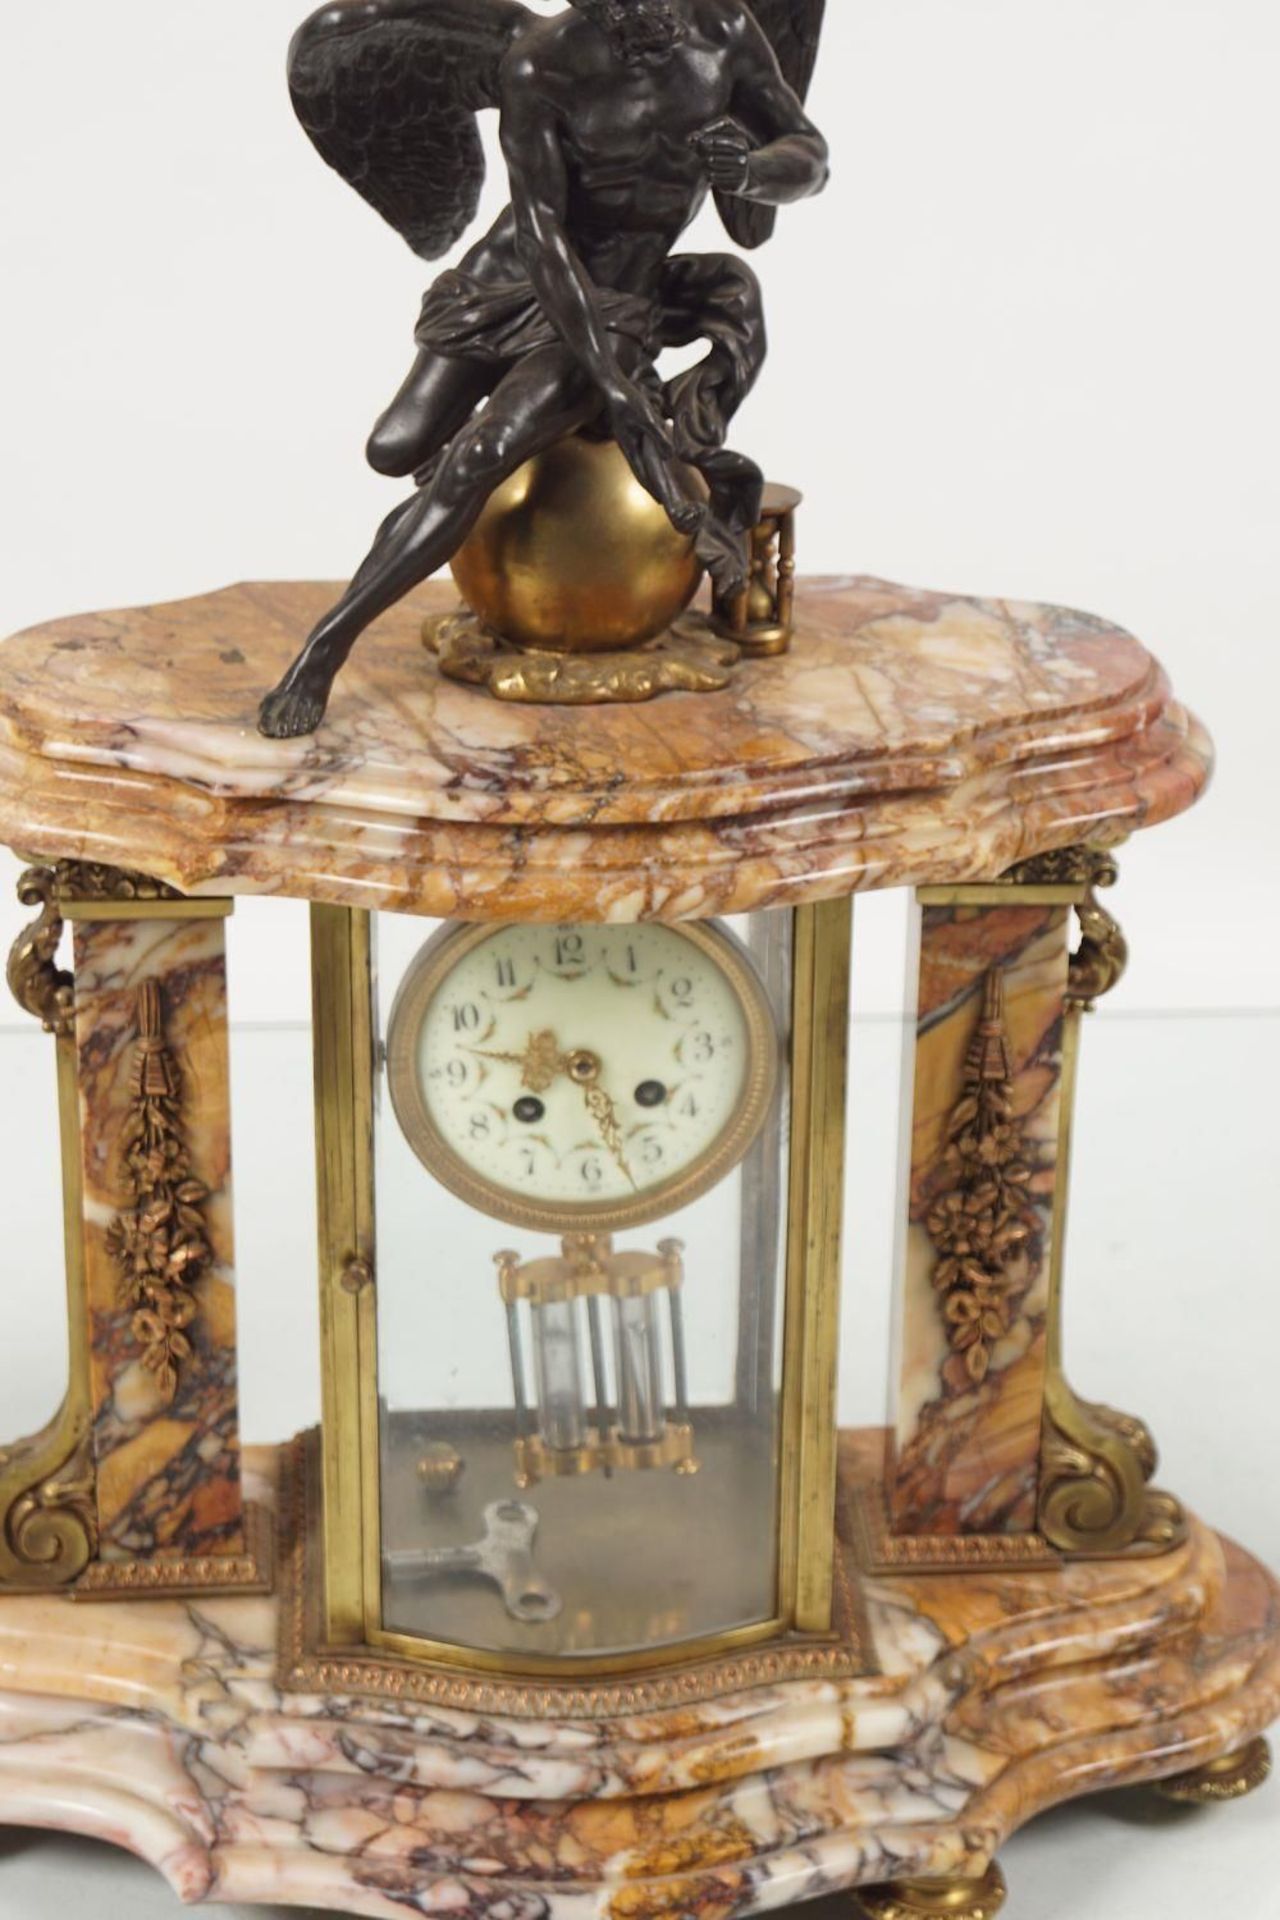 19TH-CENTURY FRENCH ORMOLU & MARBLE MANTEL CLOCK - Image 2 of 2